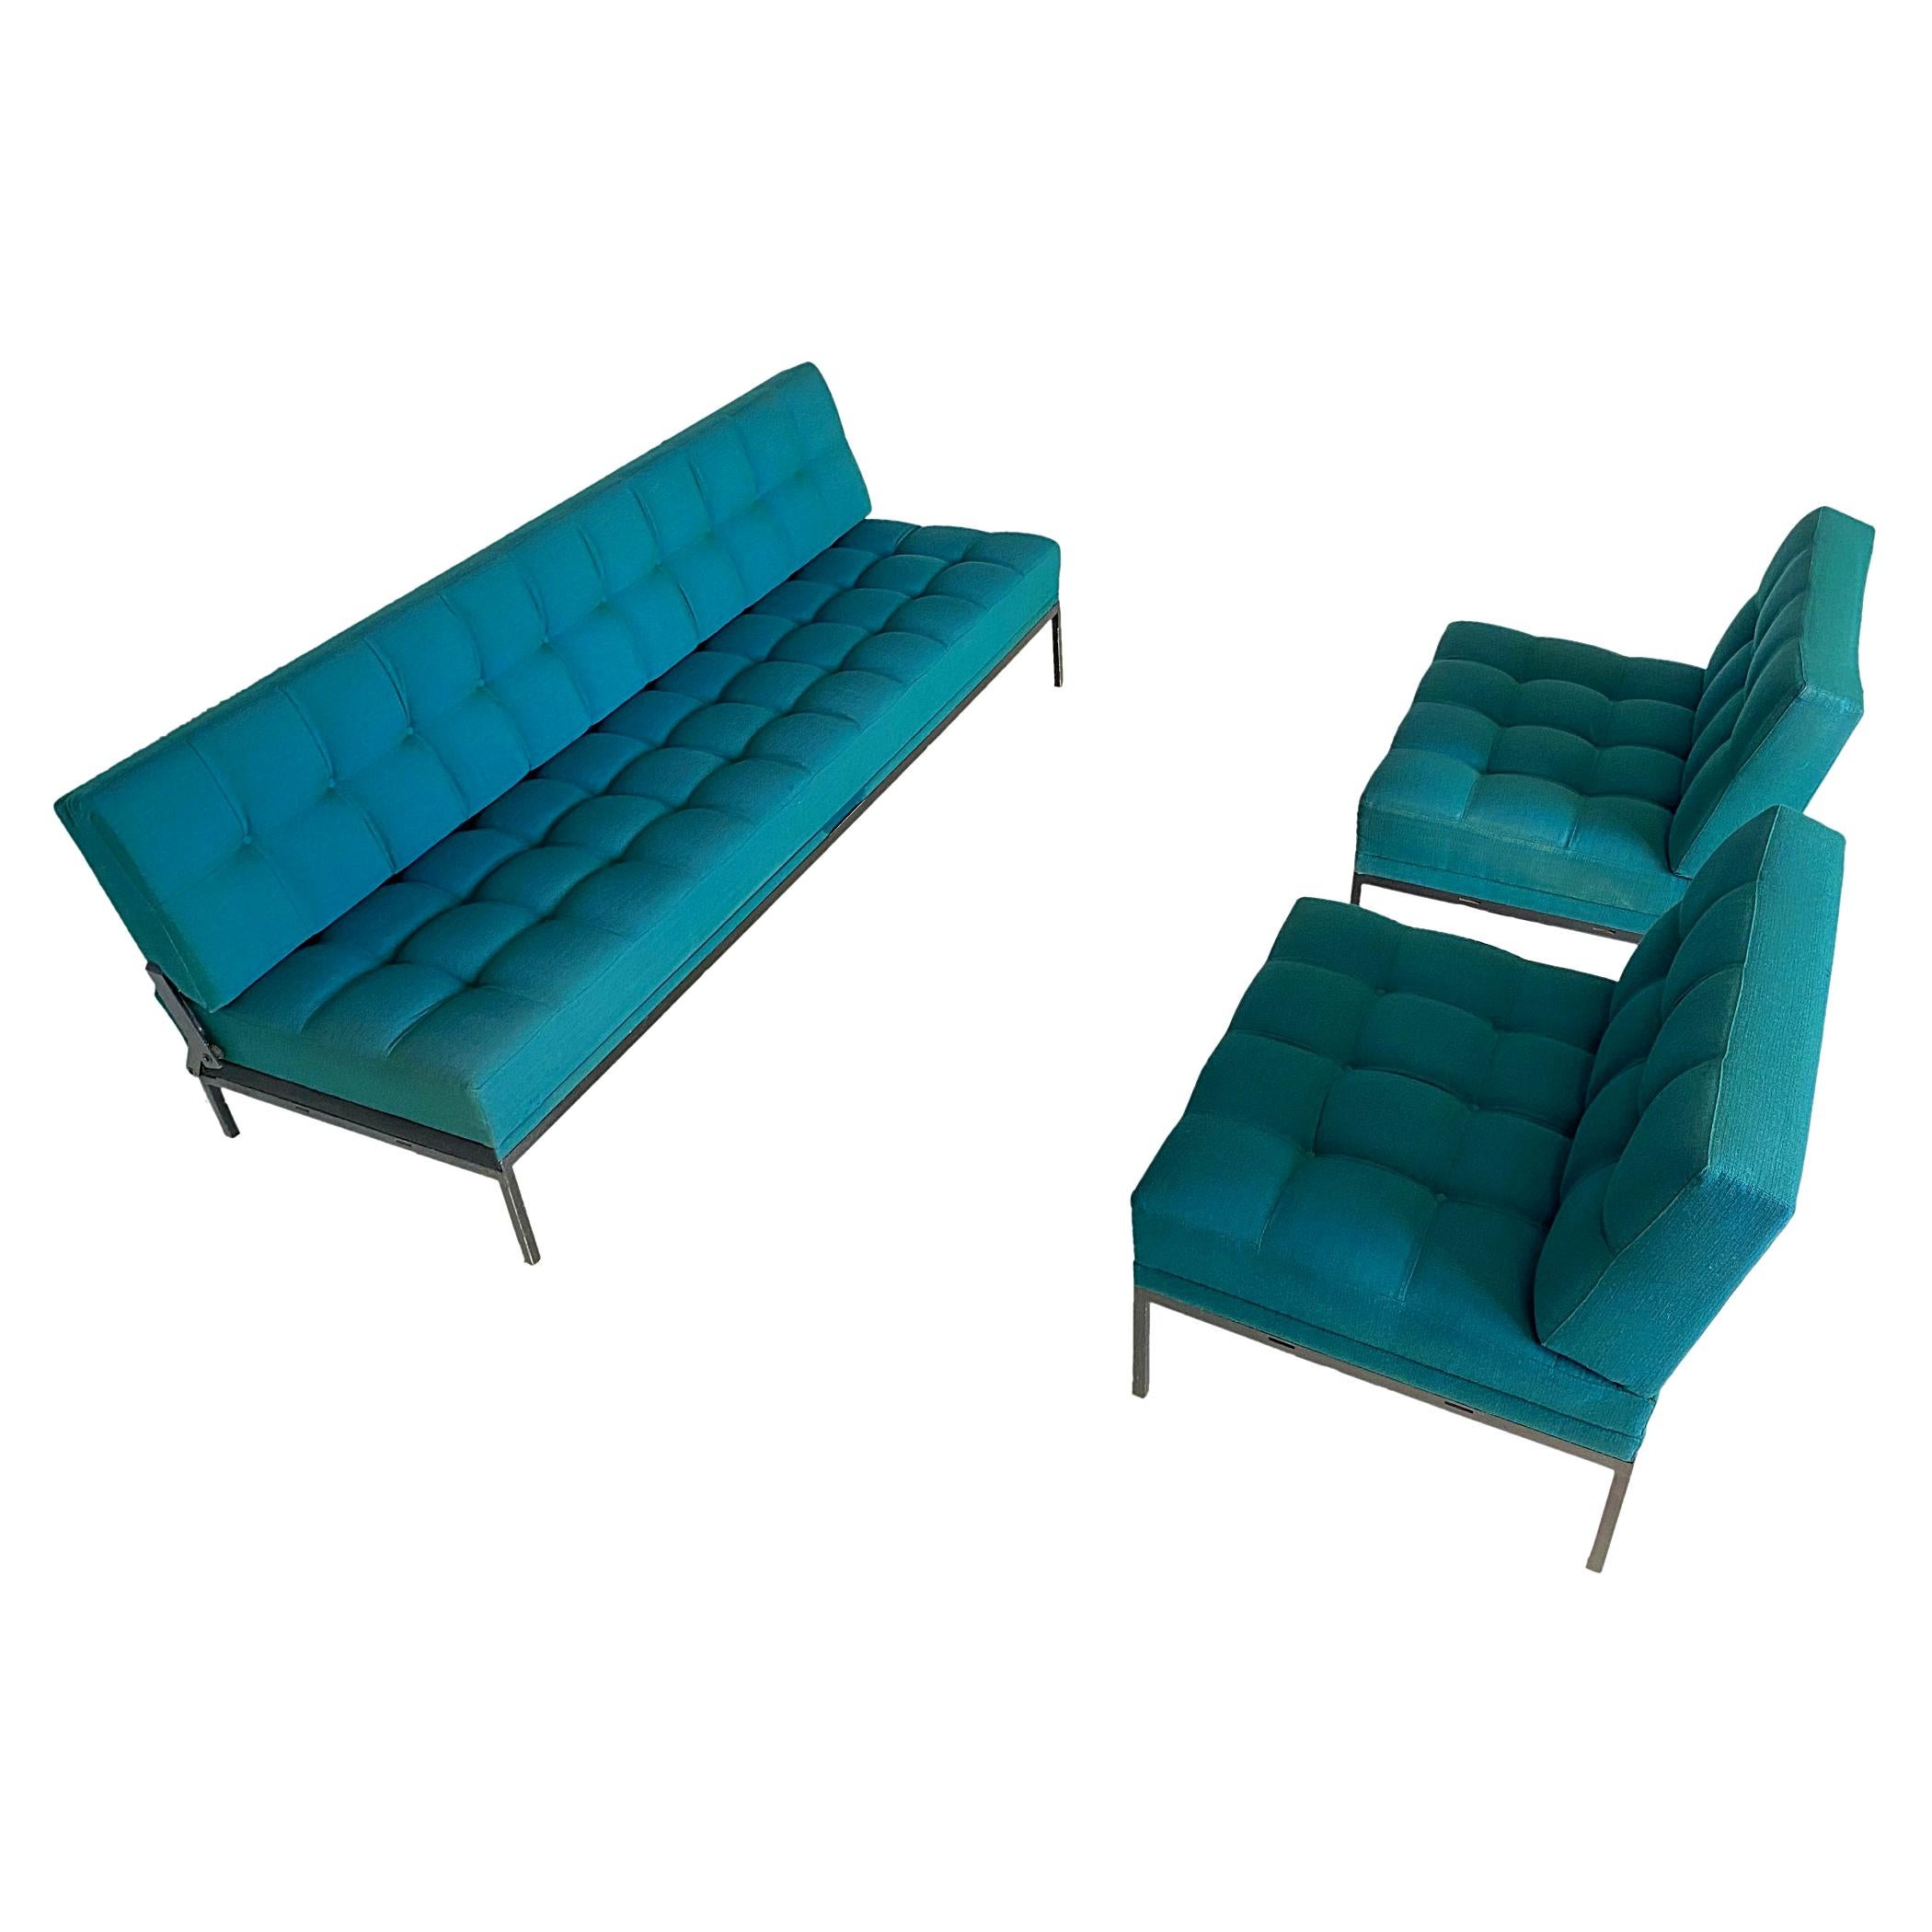 Wittmann Constanze Tufted Midcentury Sofa & Chairs by J. Spalt, 1970s, Austria